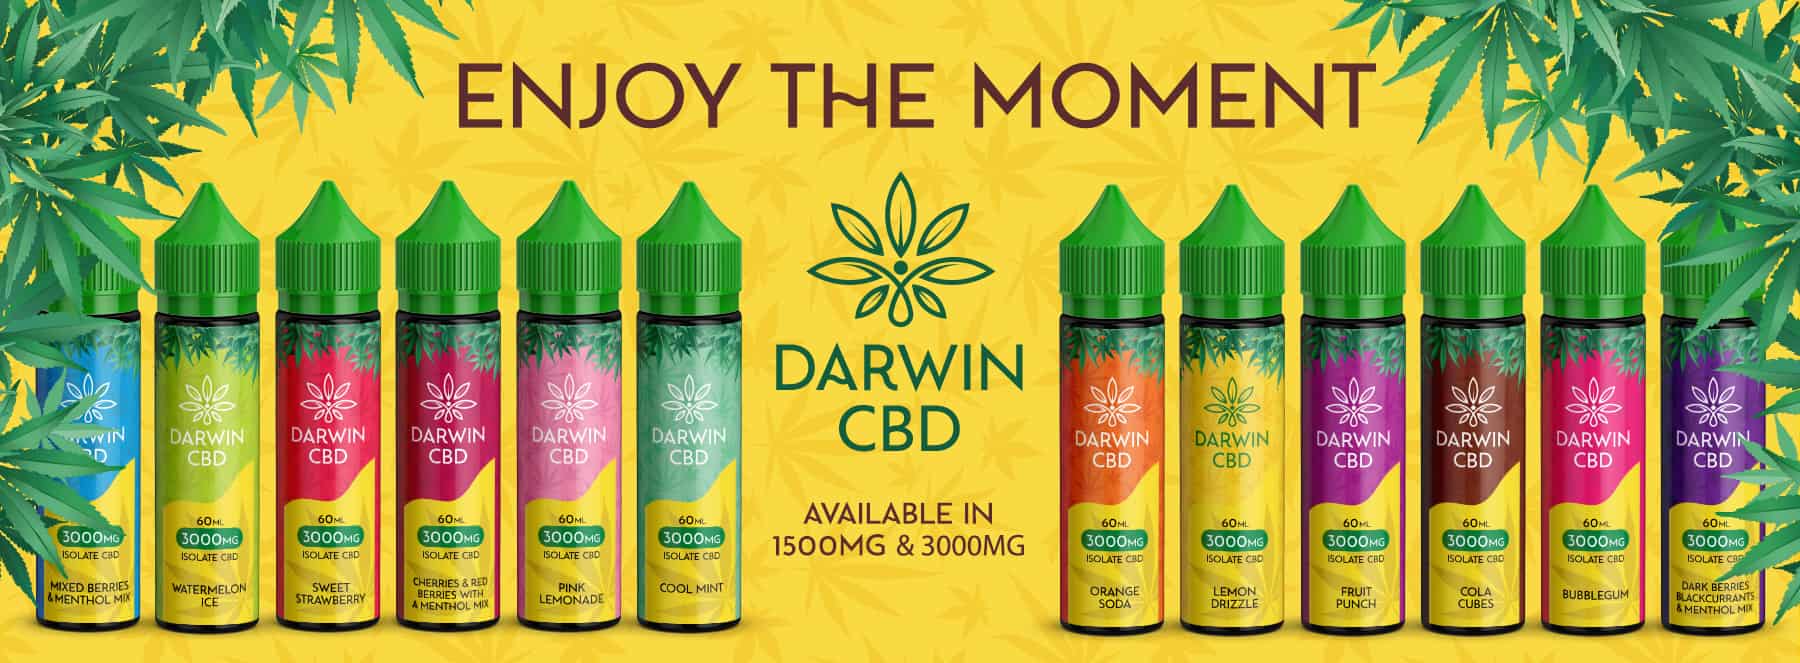 Darwin CBD vape juice enjoy the moment banner